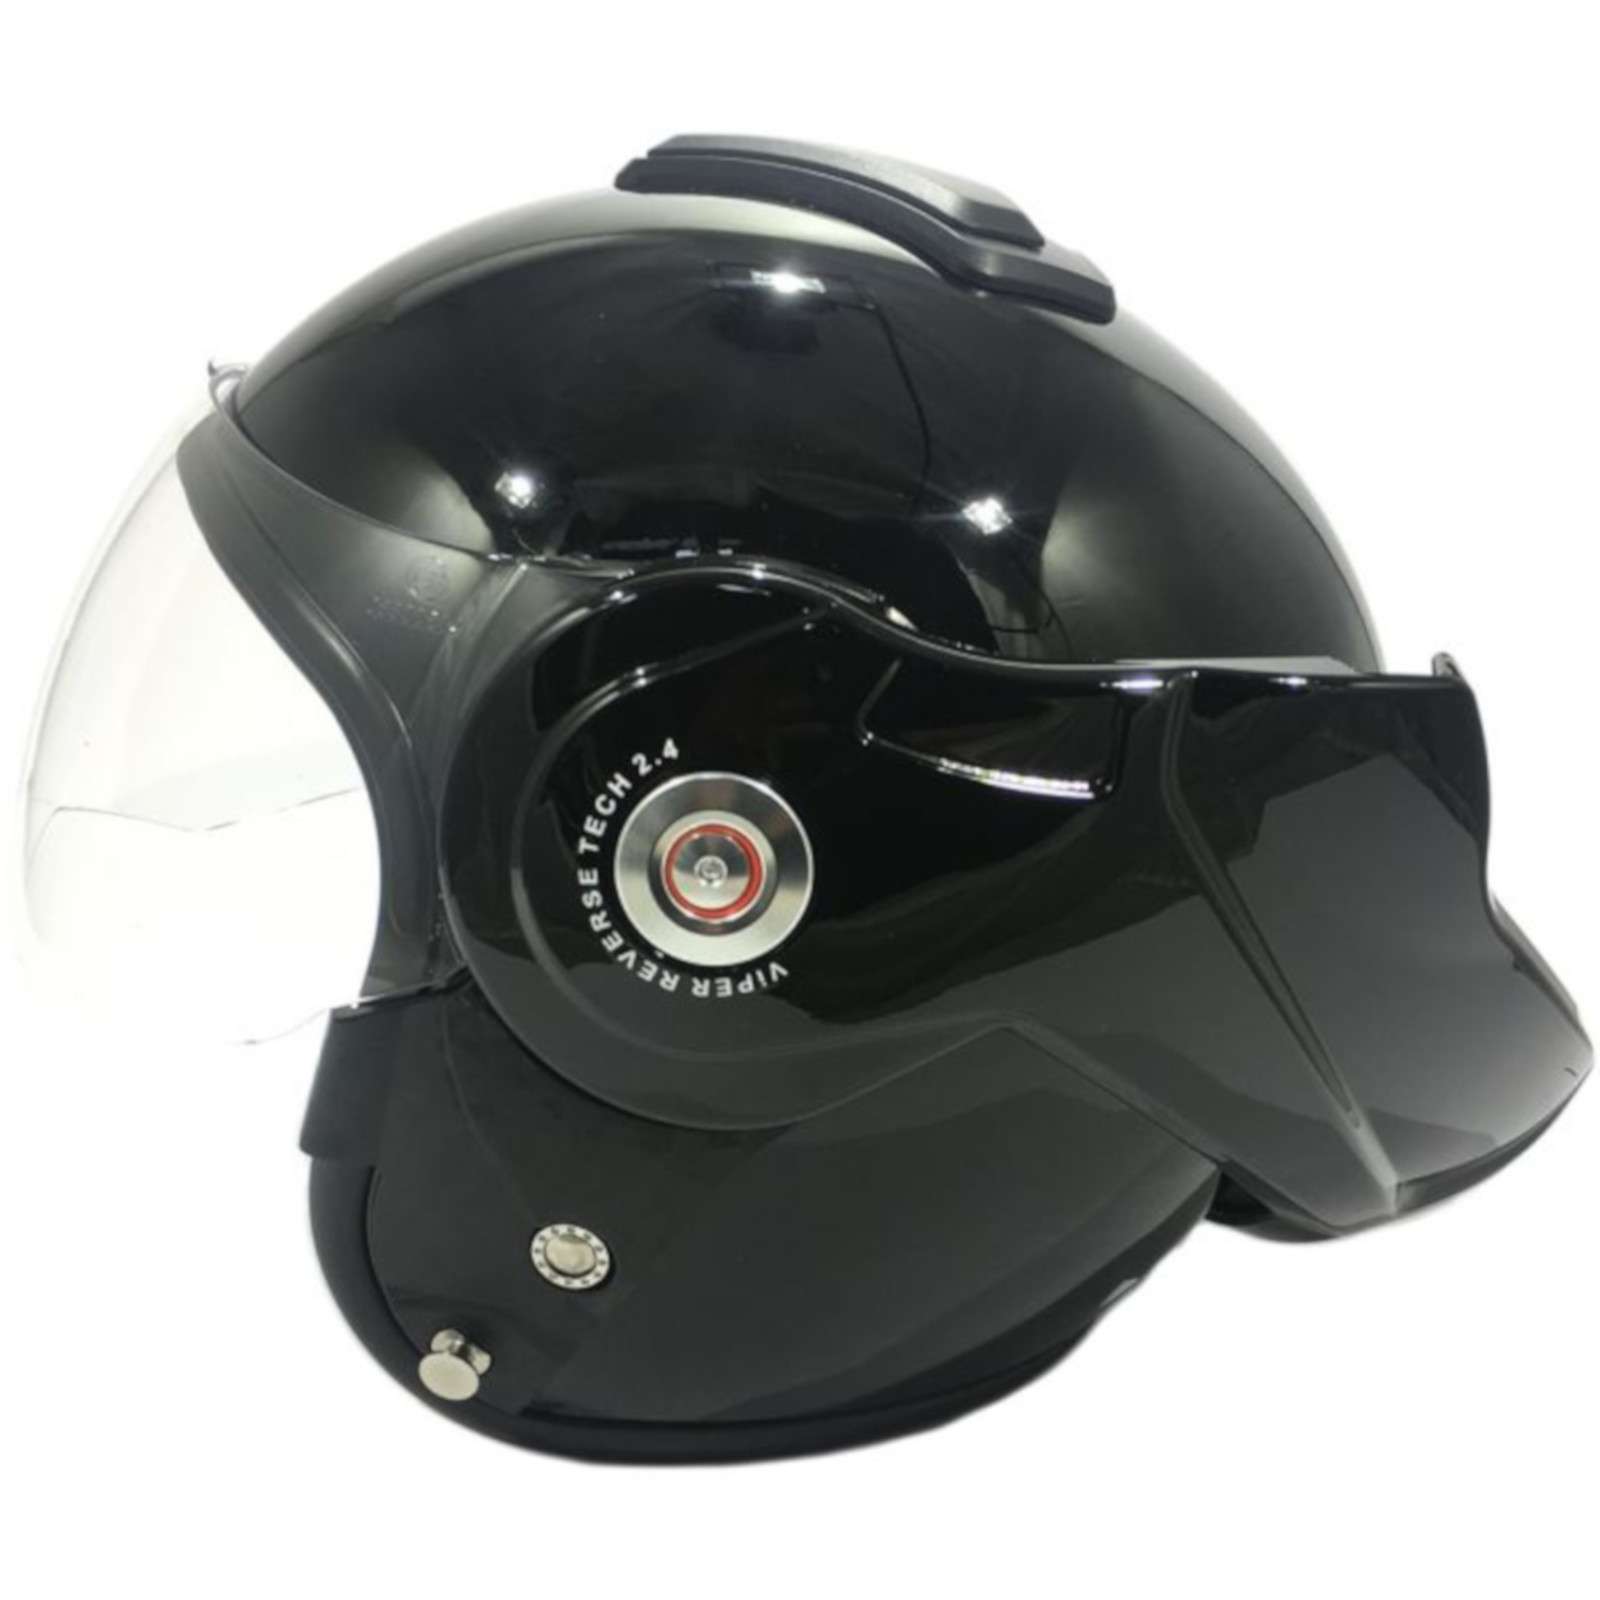 Viper RS202 Reverse Flip Front Motorcycle Motorbike Touring Helmet